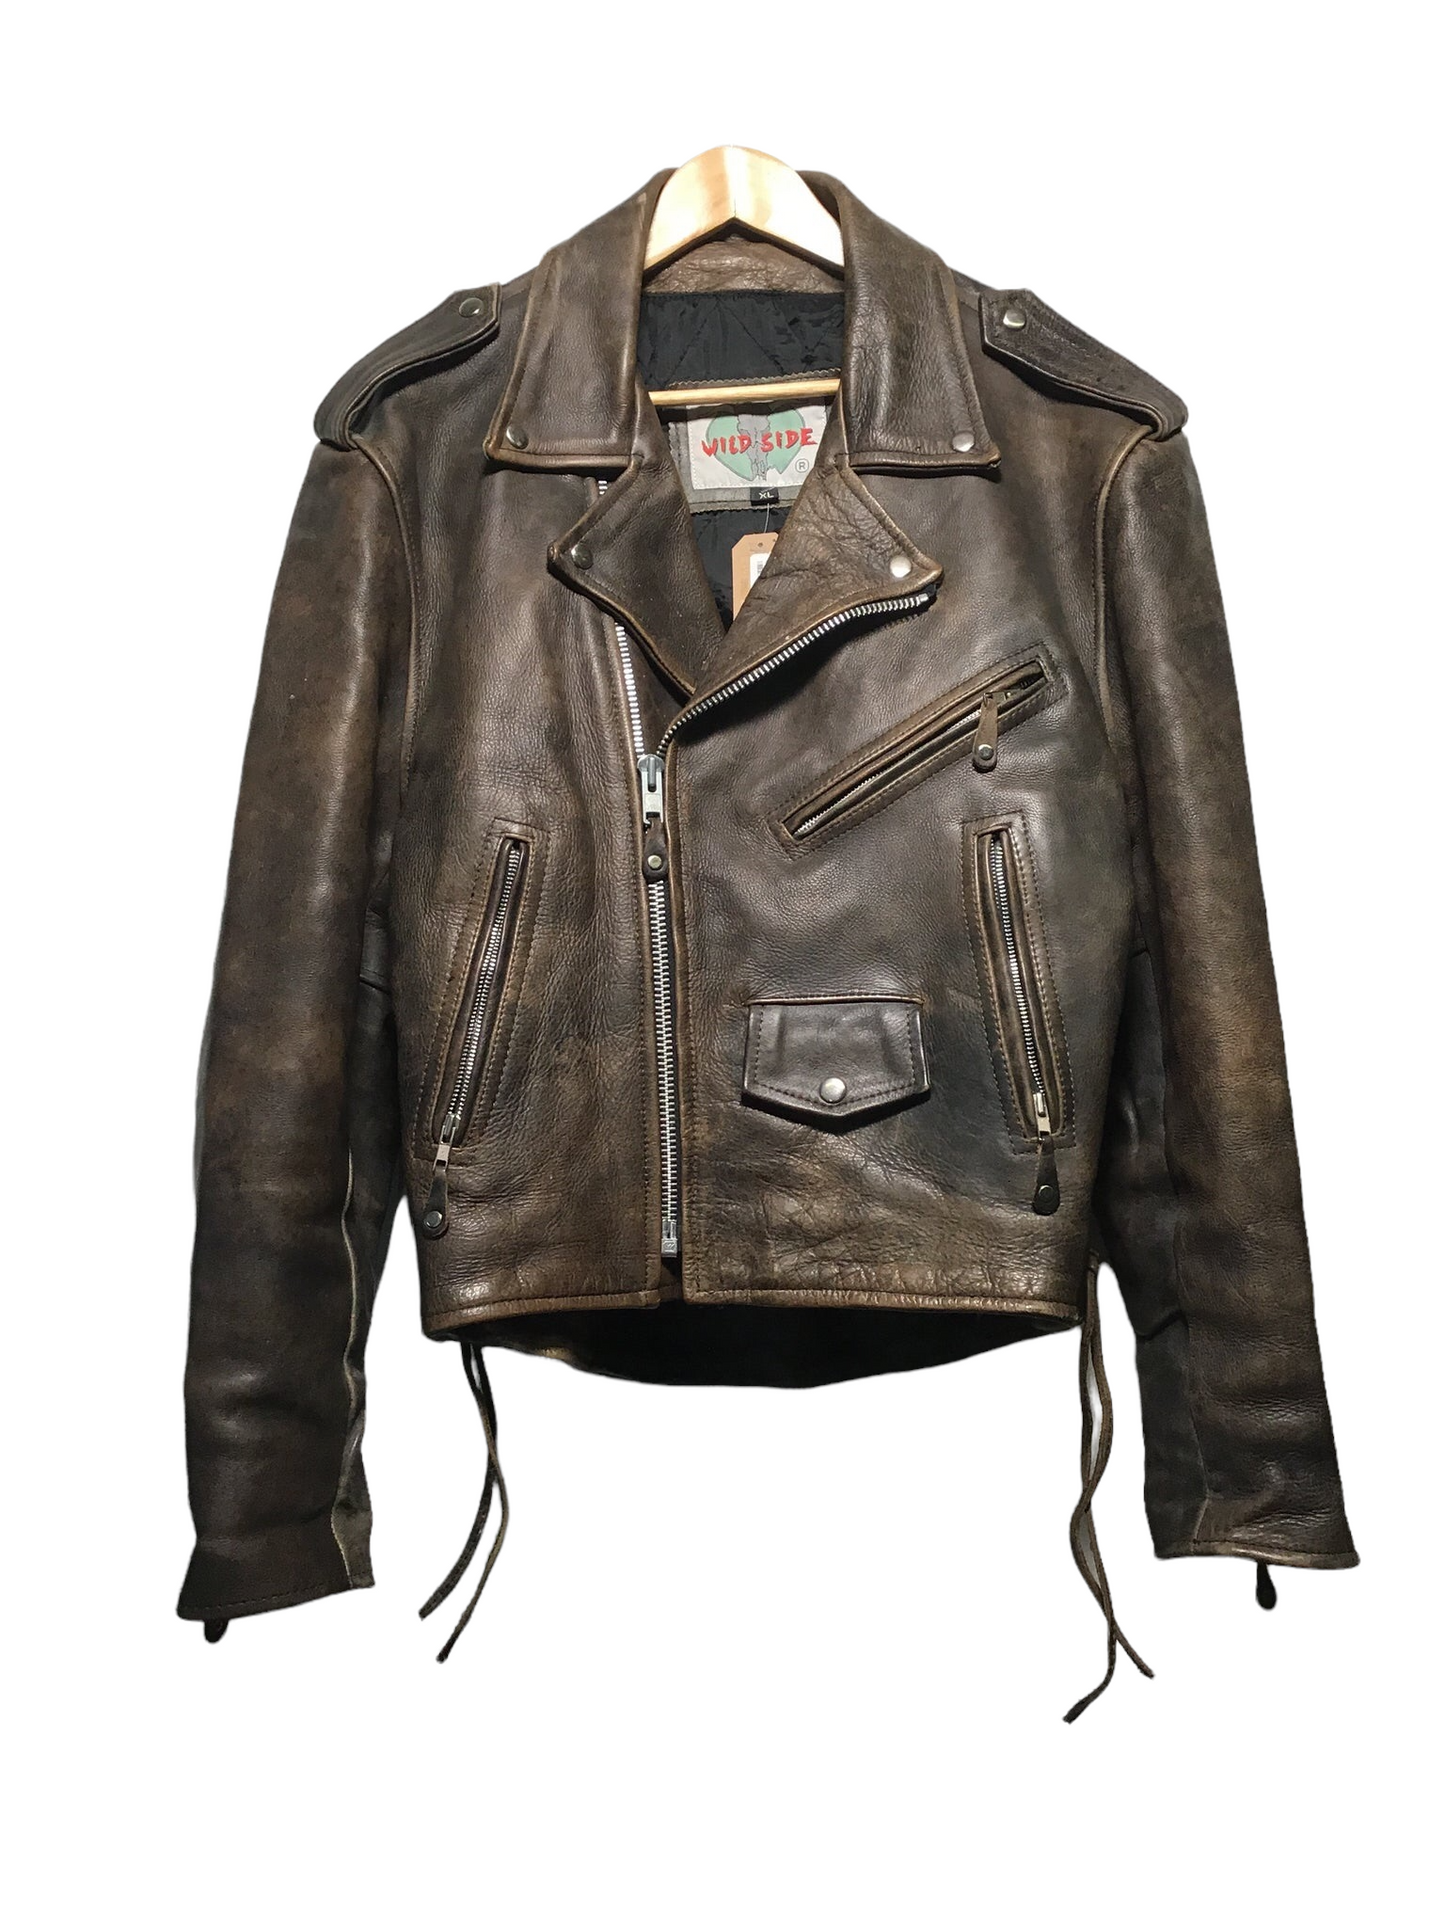 Wildside Leather Jacket (Size XL)